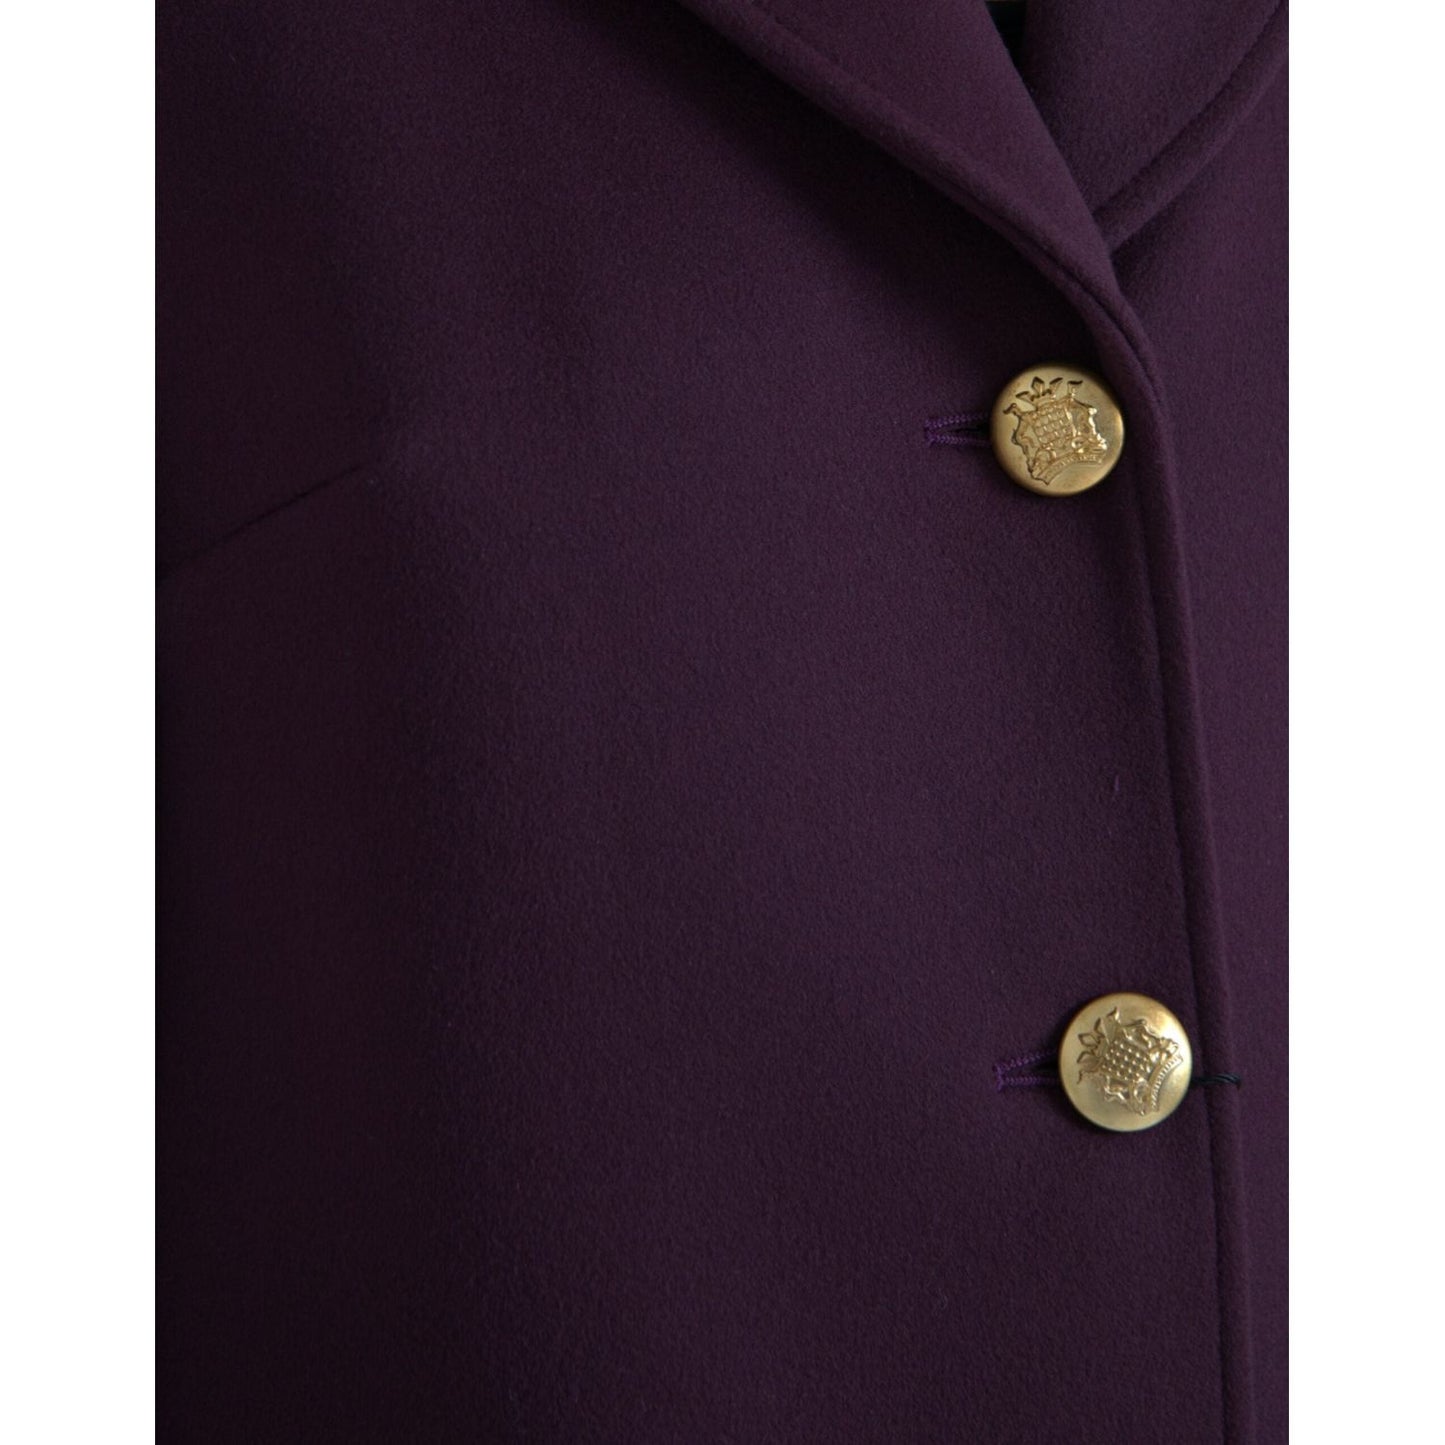 Dolce & Gabbana Elegant Purple Wool-Cashmere Trench Coat elegant-purple-wool-cashmere-trench-coat